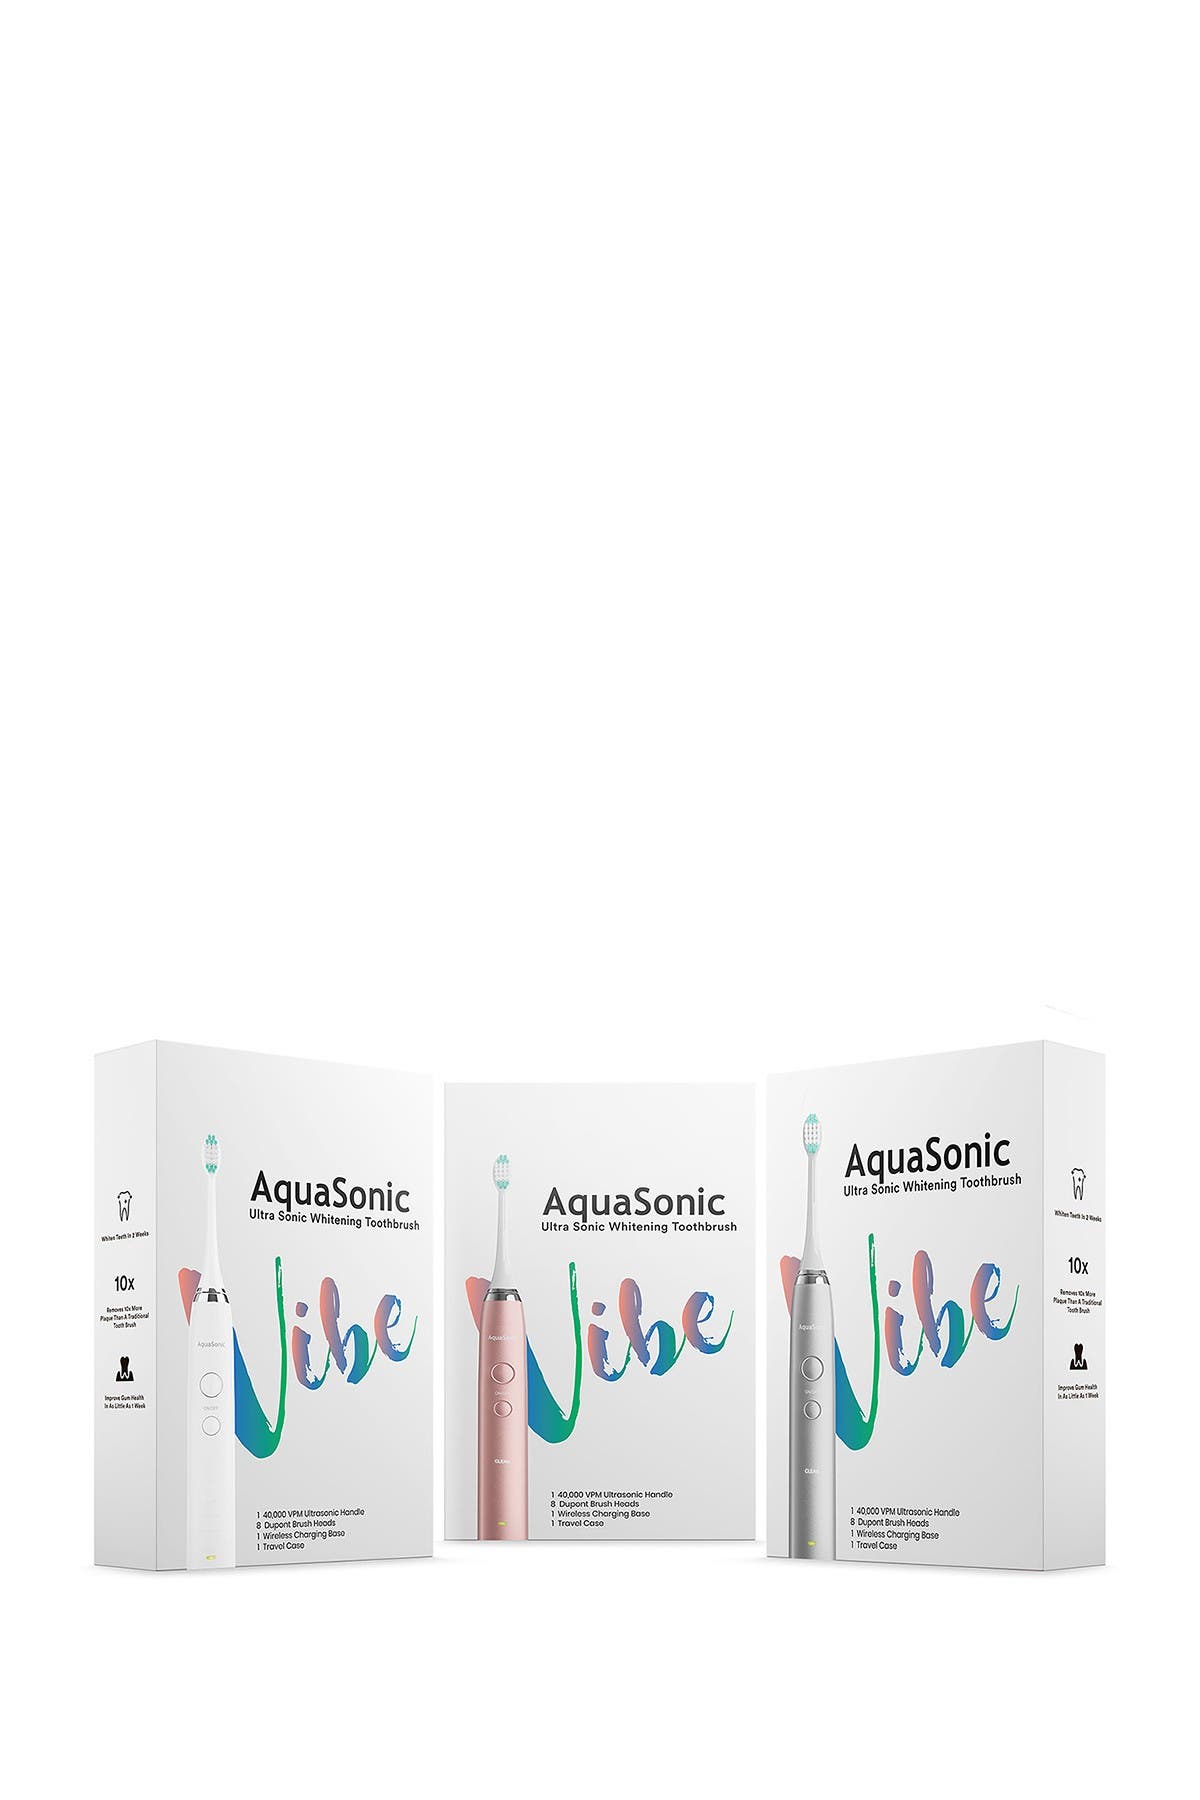 Aquasonic Vibe Series White Ultrasonic Whitening Toothbrush With 8 Dupont Brush Heads & Travel Case